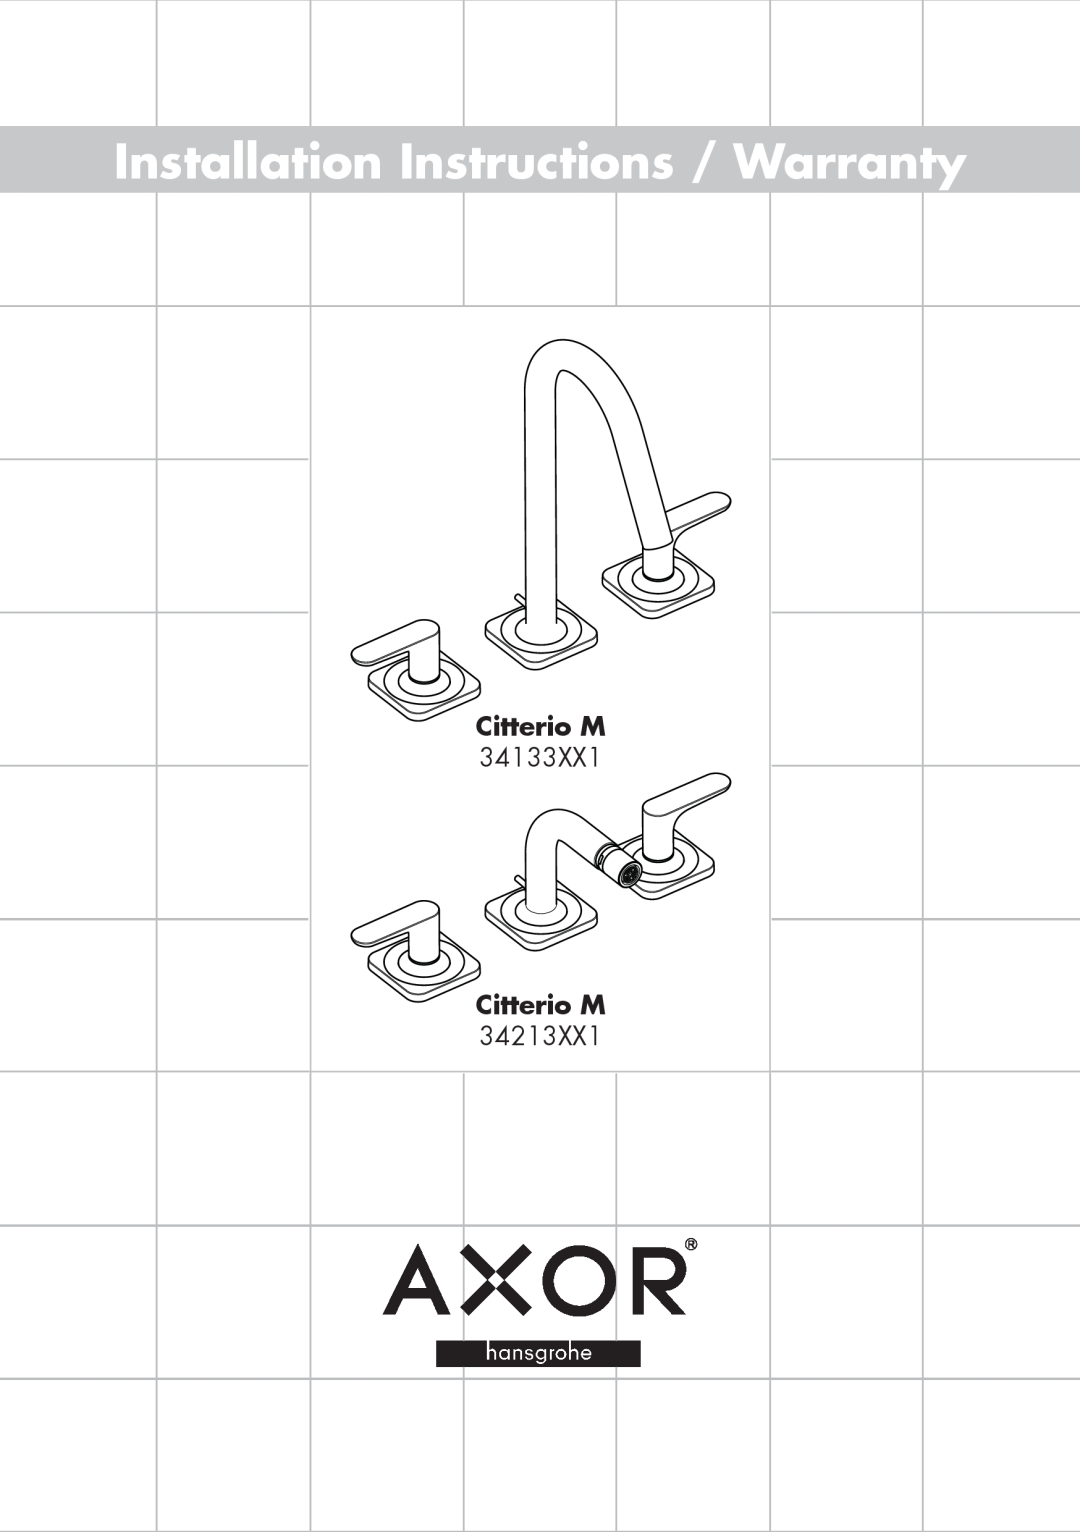 Axor 34213XX1 installation instructions Citterio M, Installation Instructions / Warranty, 34133XX1 